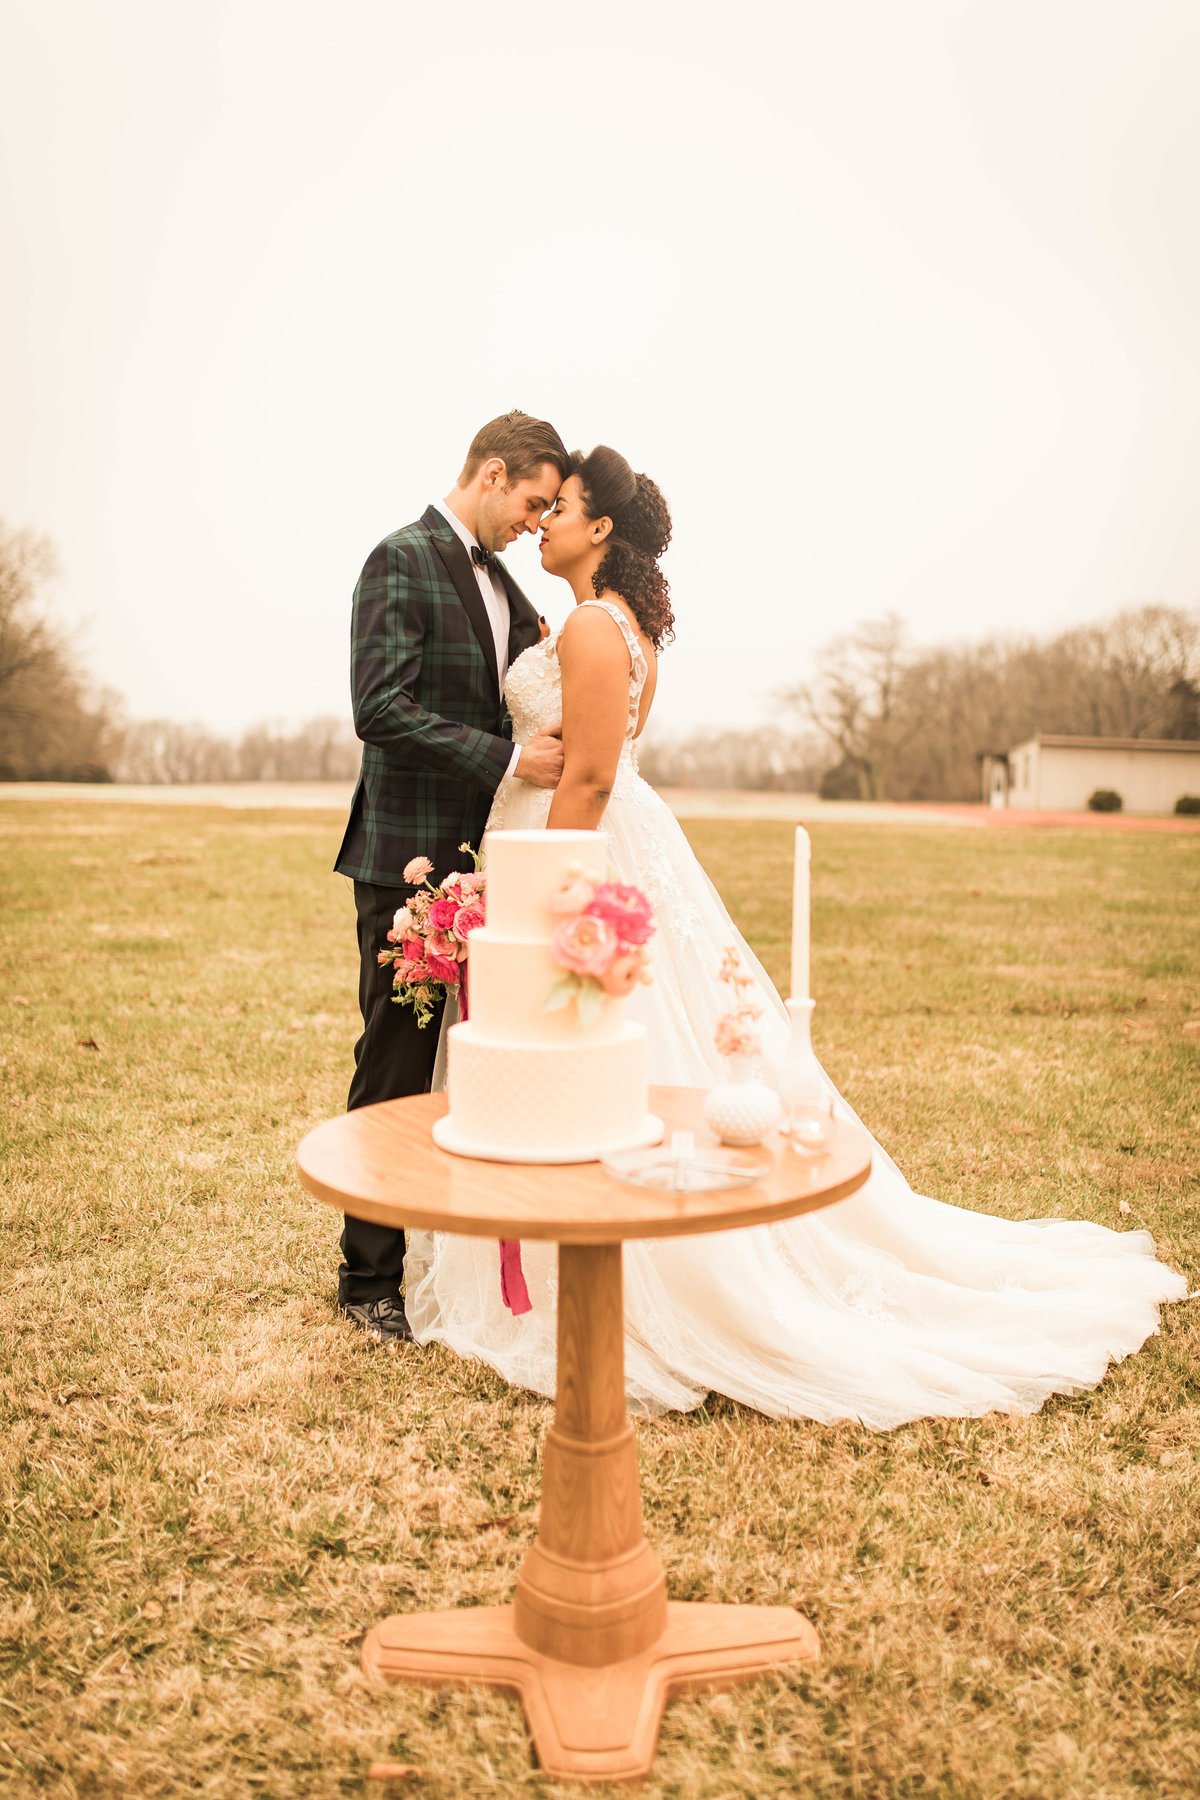 Retro Styled Shoot - Sophia and Andrew - St Louis Wedding Photographer - Allison Slater Photography 172